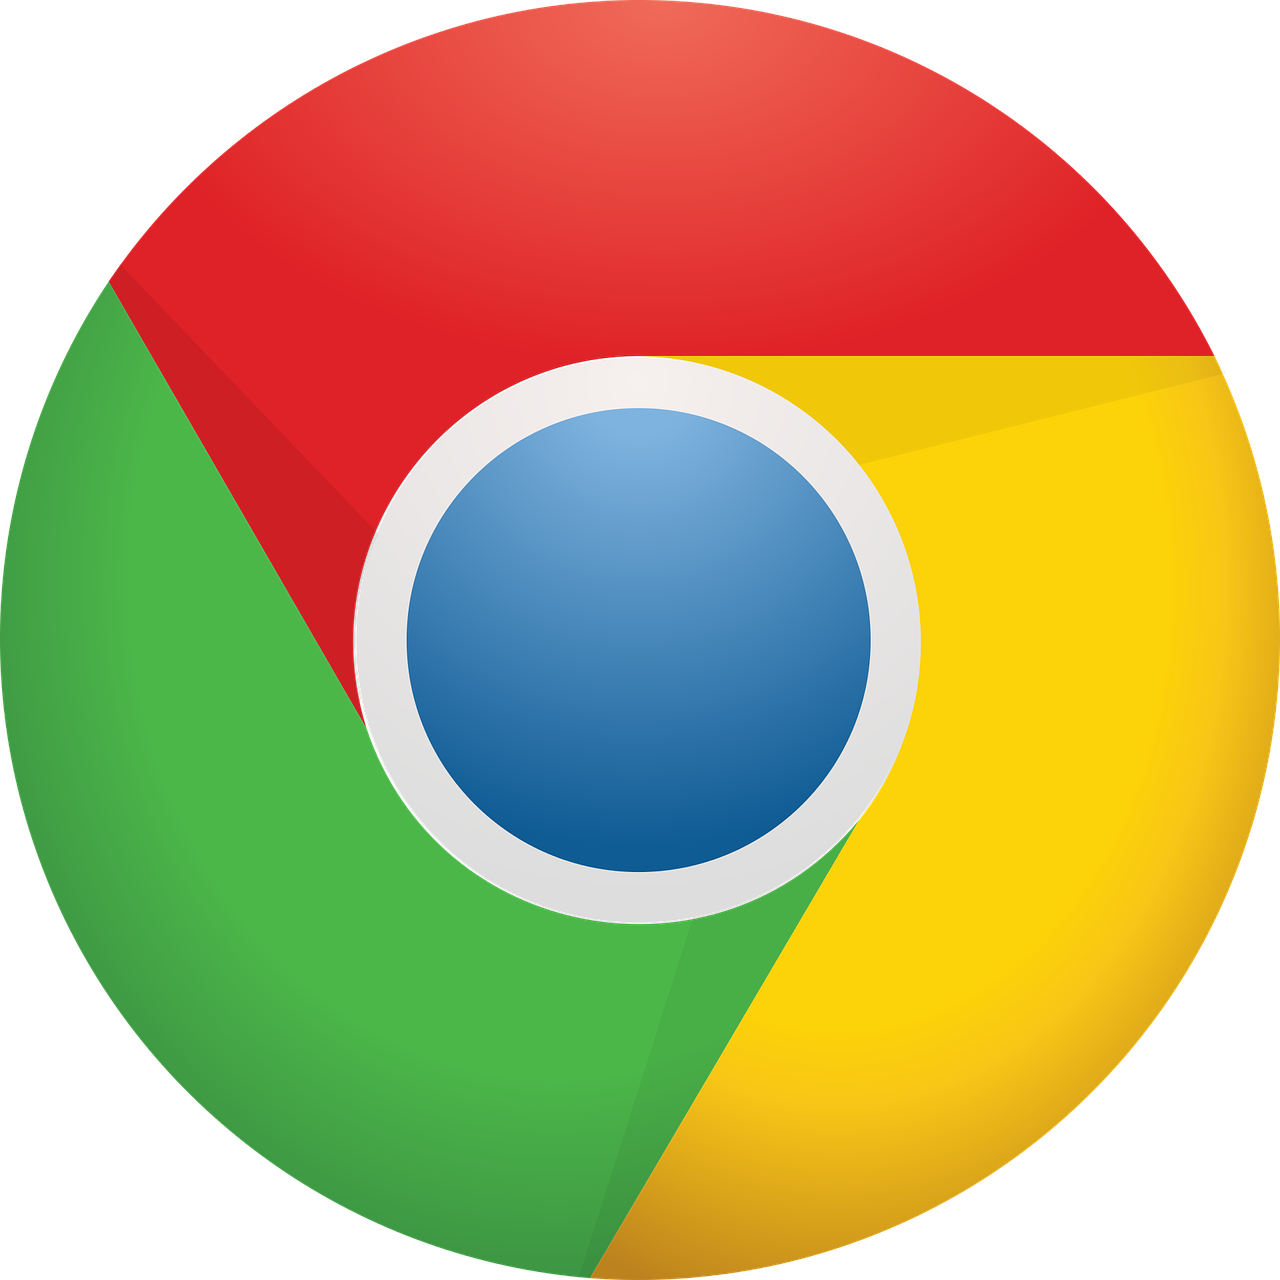 Google Chrome Image